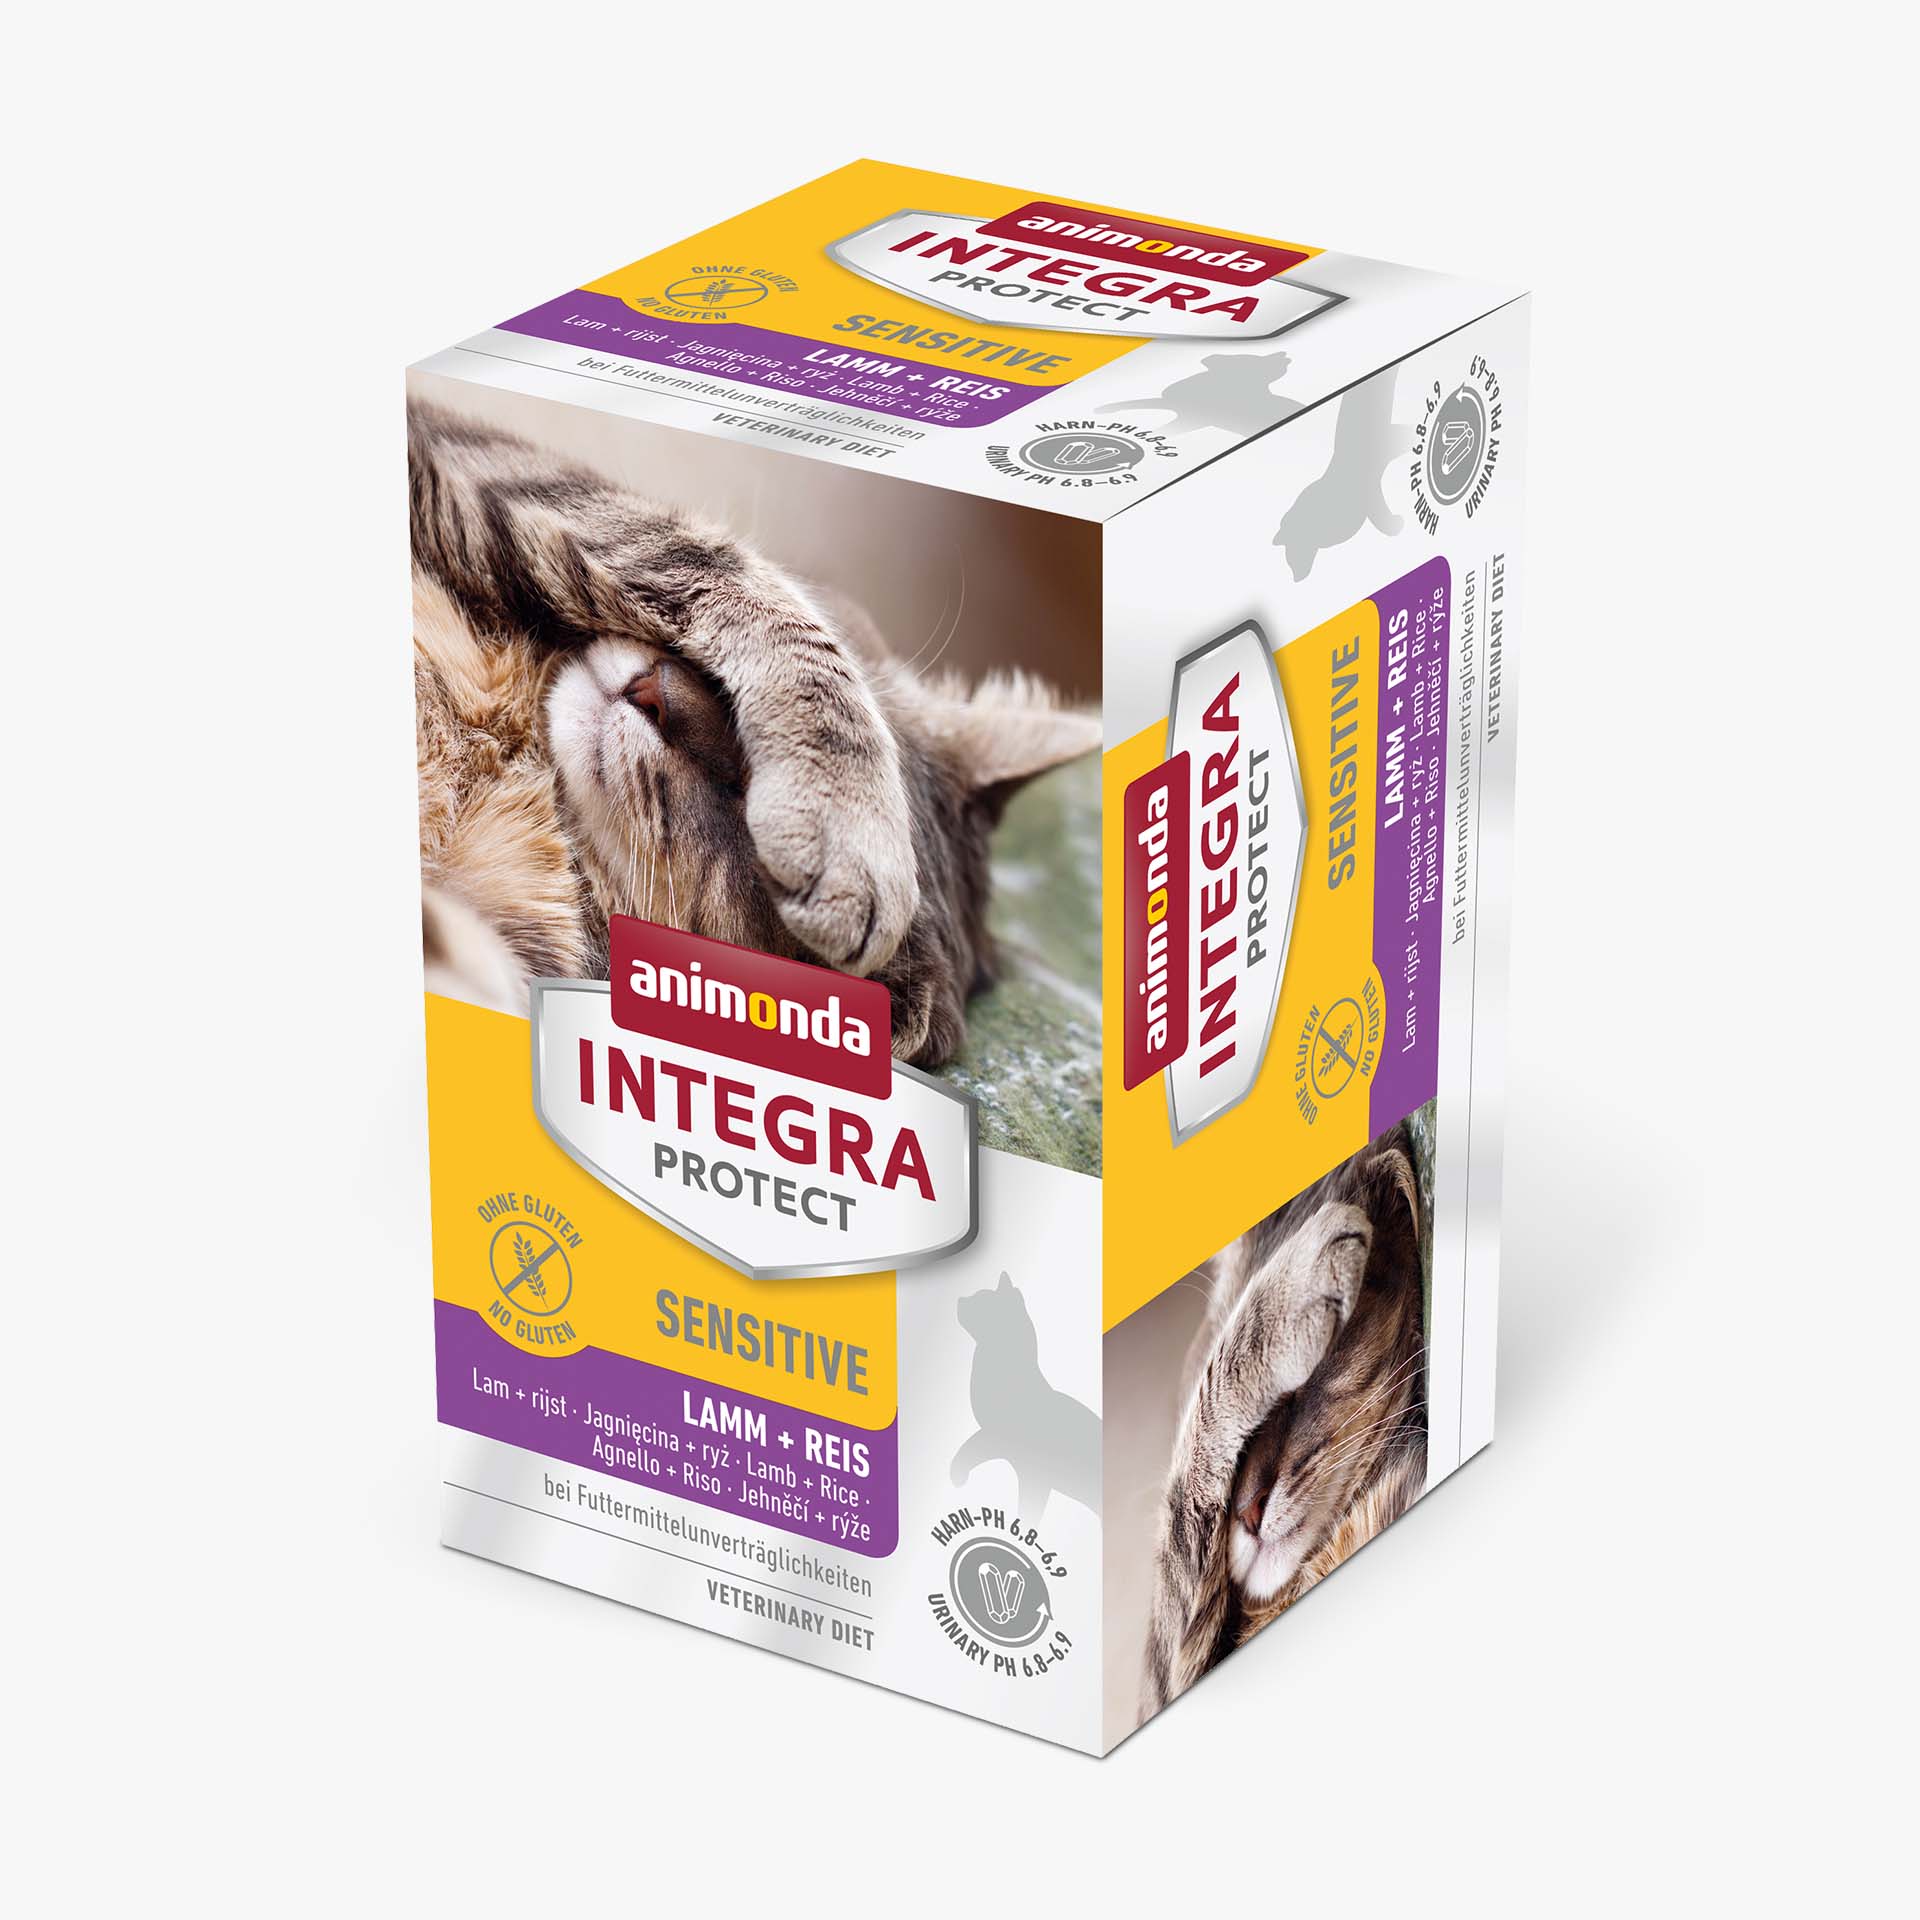 INTEGRA PROTECT Lamb + rice Sensitive